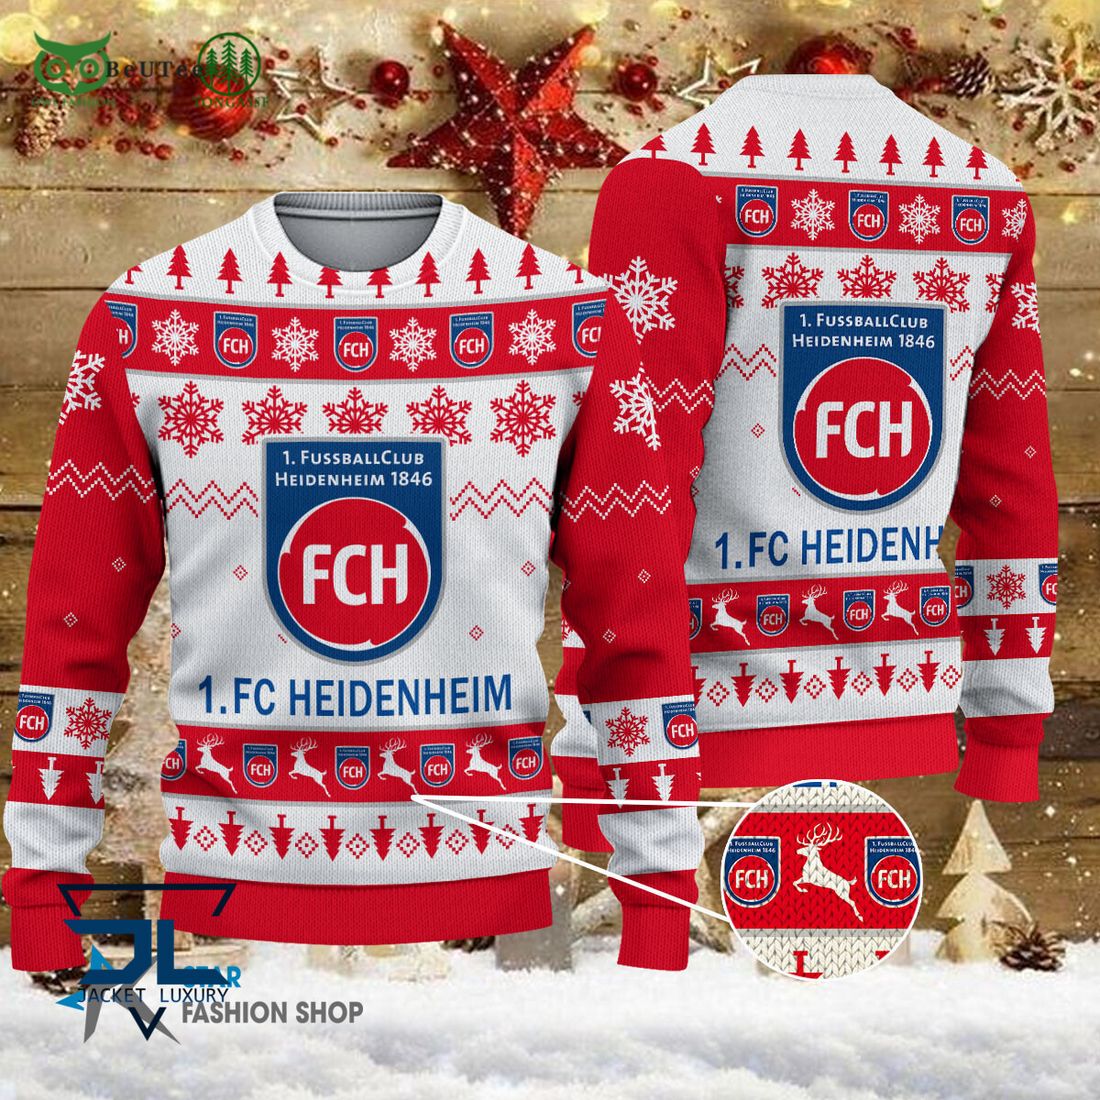 LIMITED DESIGN FC Ingolstadt 04 Big Logo Ugly Christmas Sweater